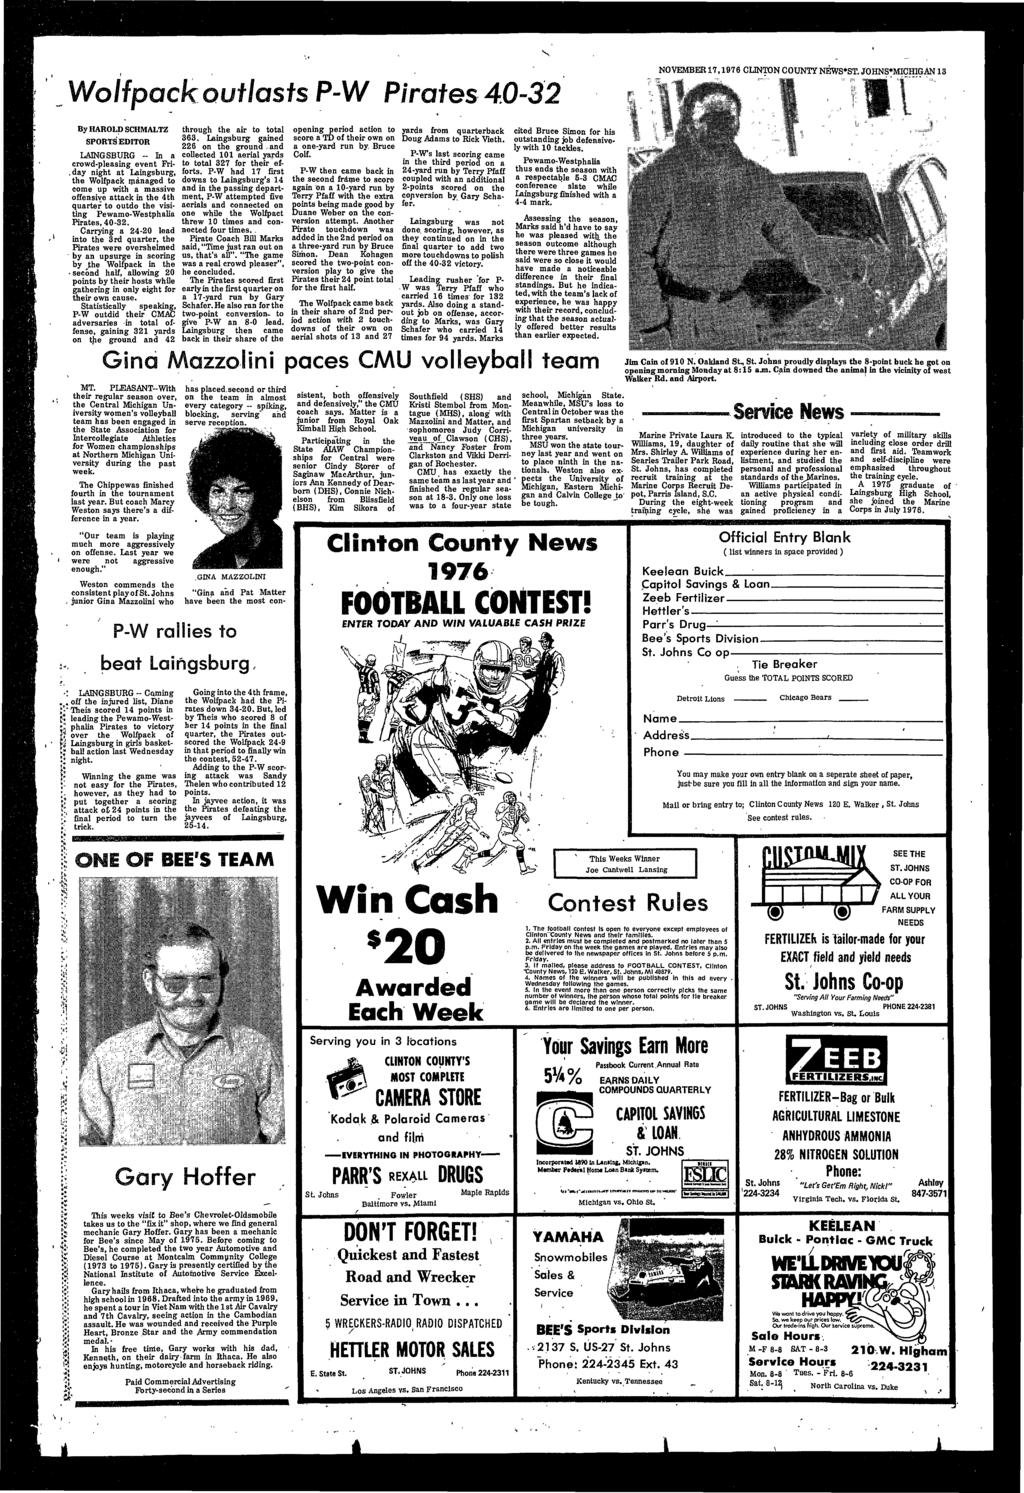 X P-W Prates 40- NOVEMBER 17,1976 CLINTON COUNTY NEWS*ST. JOHNS*MICHIGAN 13 *. t k -; ^ By HAROLD SCHMALTZ SPORTS EDITOR LAINGSBURG - In a crowd-pleasng event Fr-.